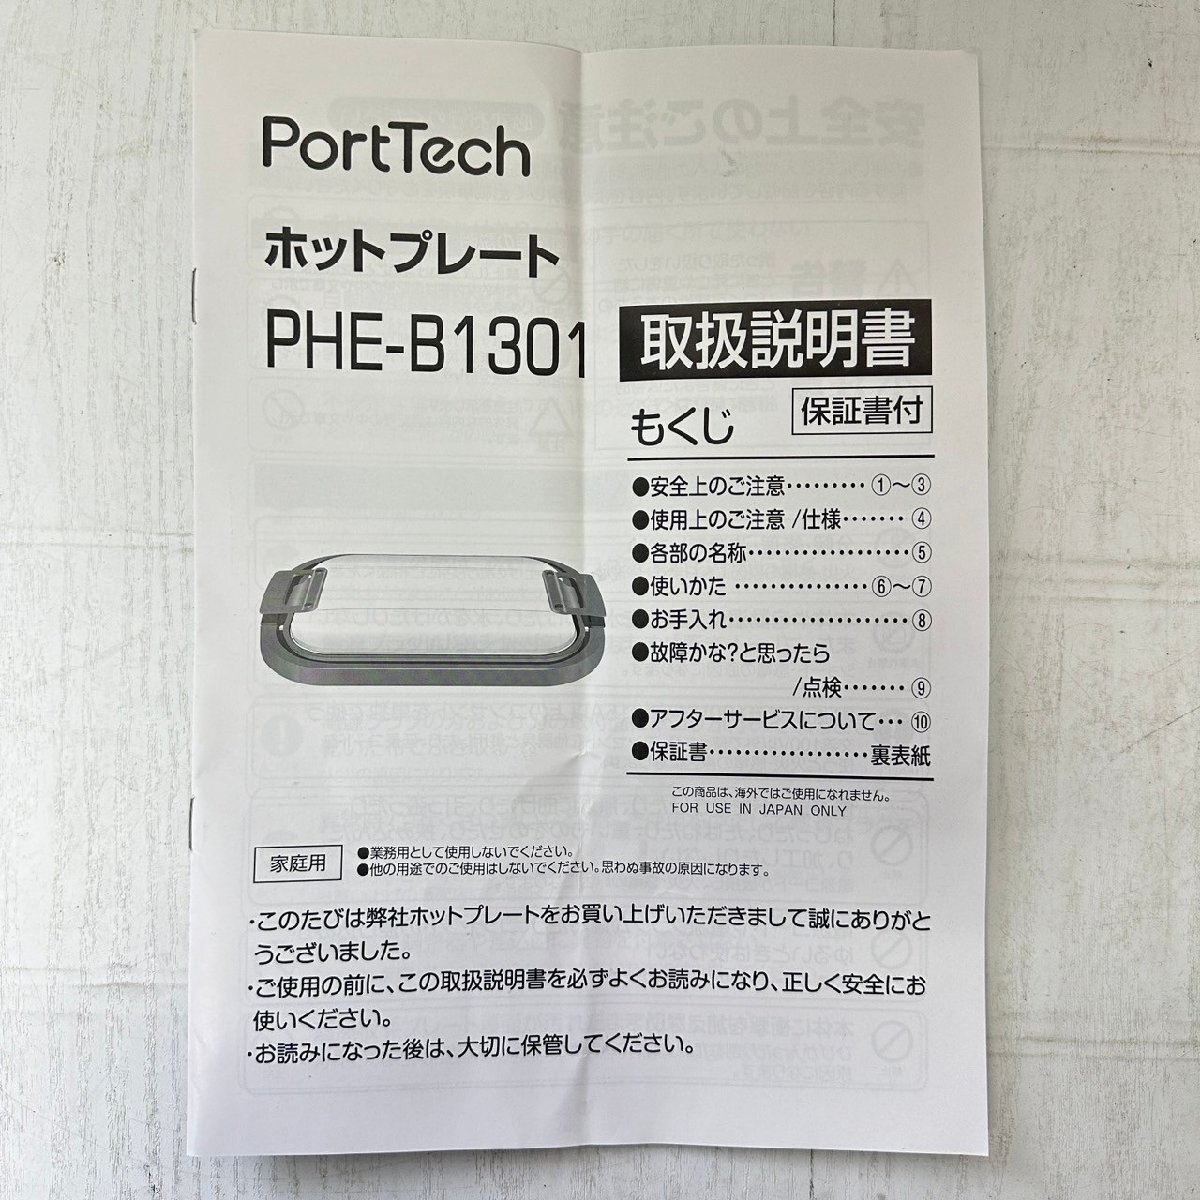 Port Tech 新品未使用ワイドホットプレートPHE-B1301 6027_画像10